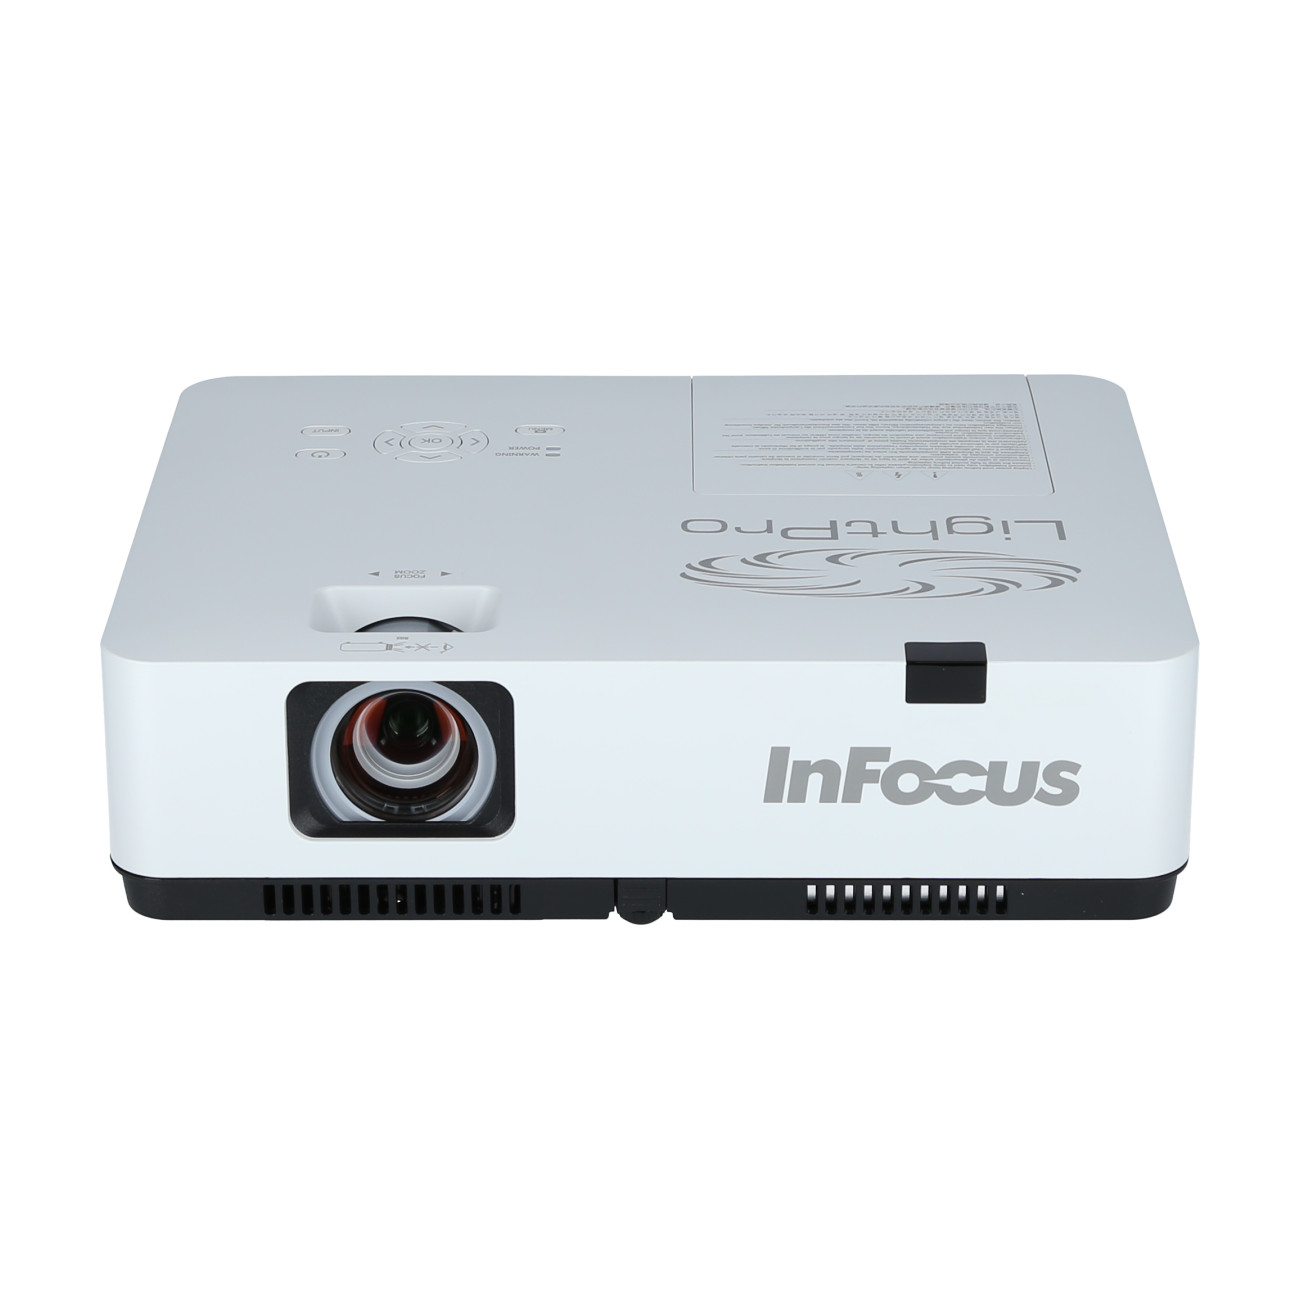 InFocus-IN1039